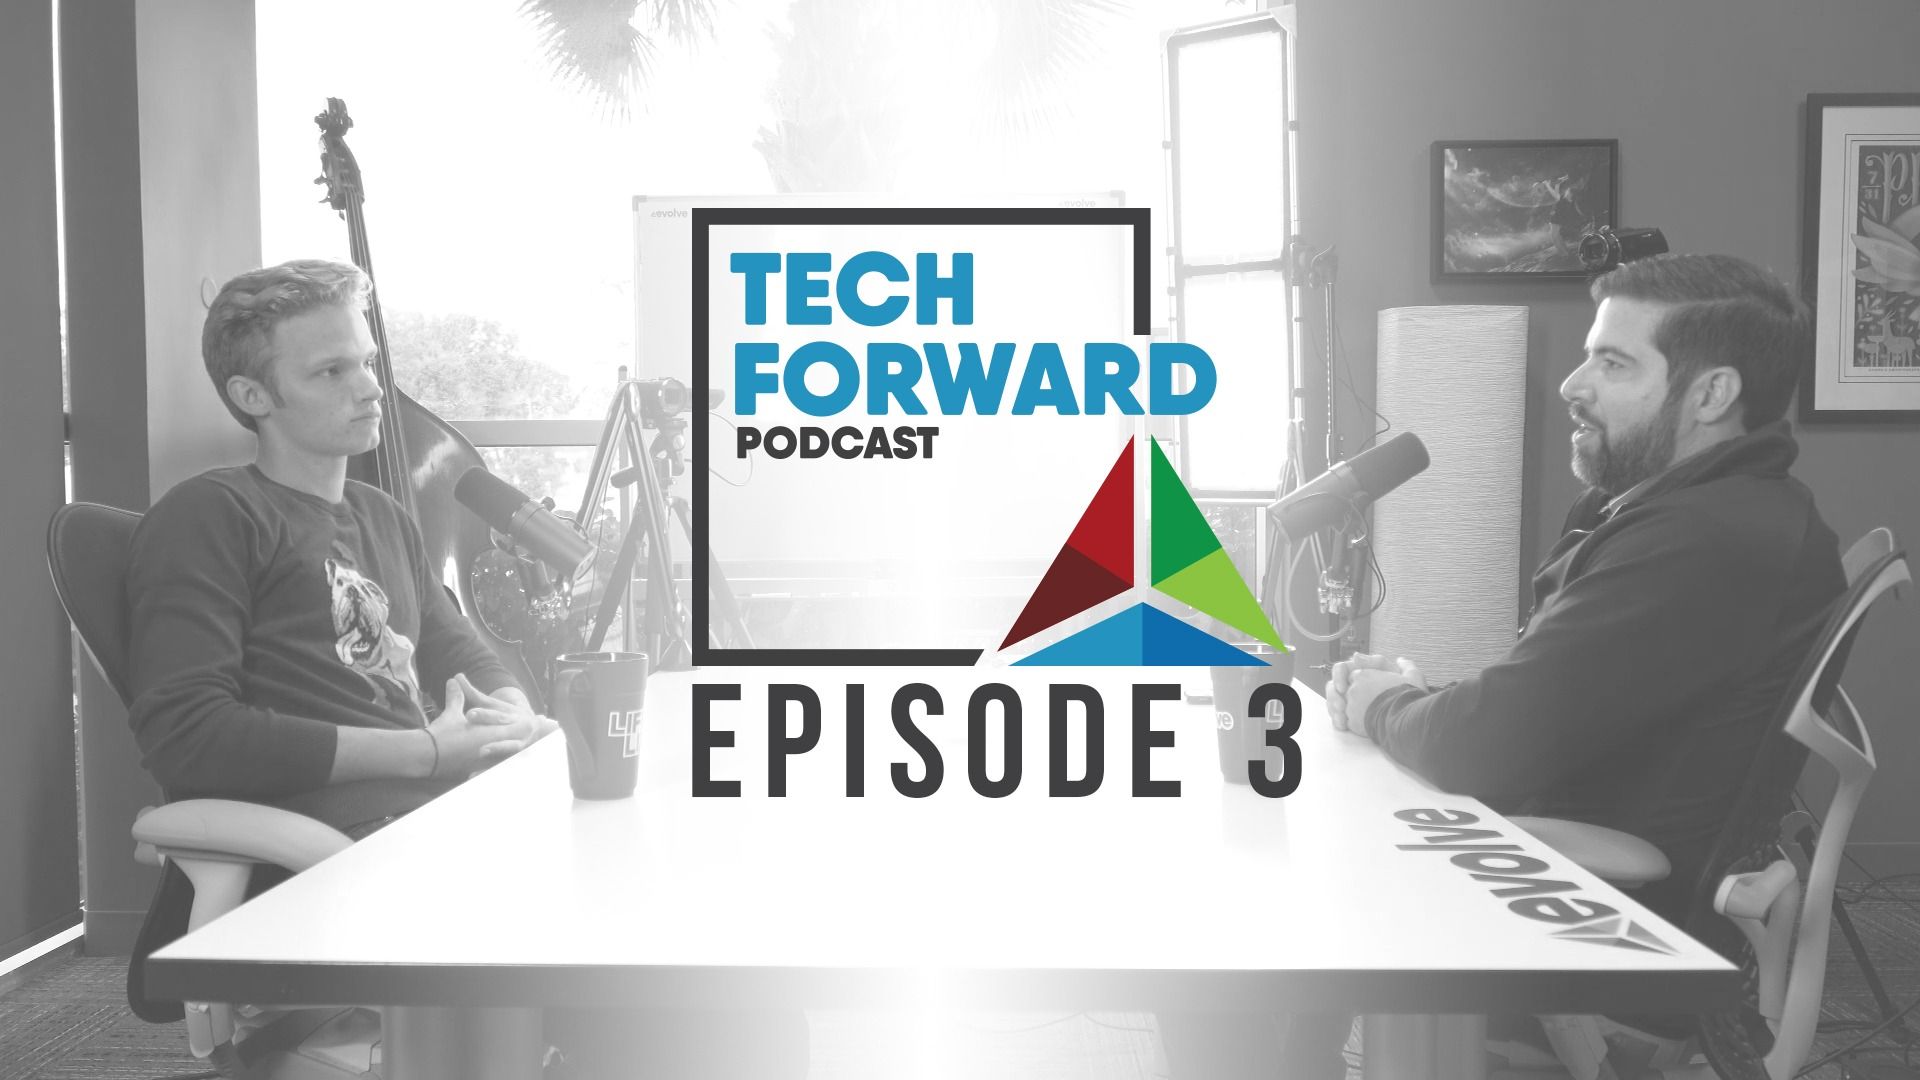 Tech forward podcast episode 3.